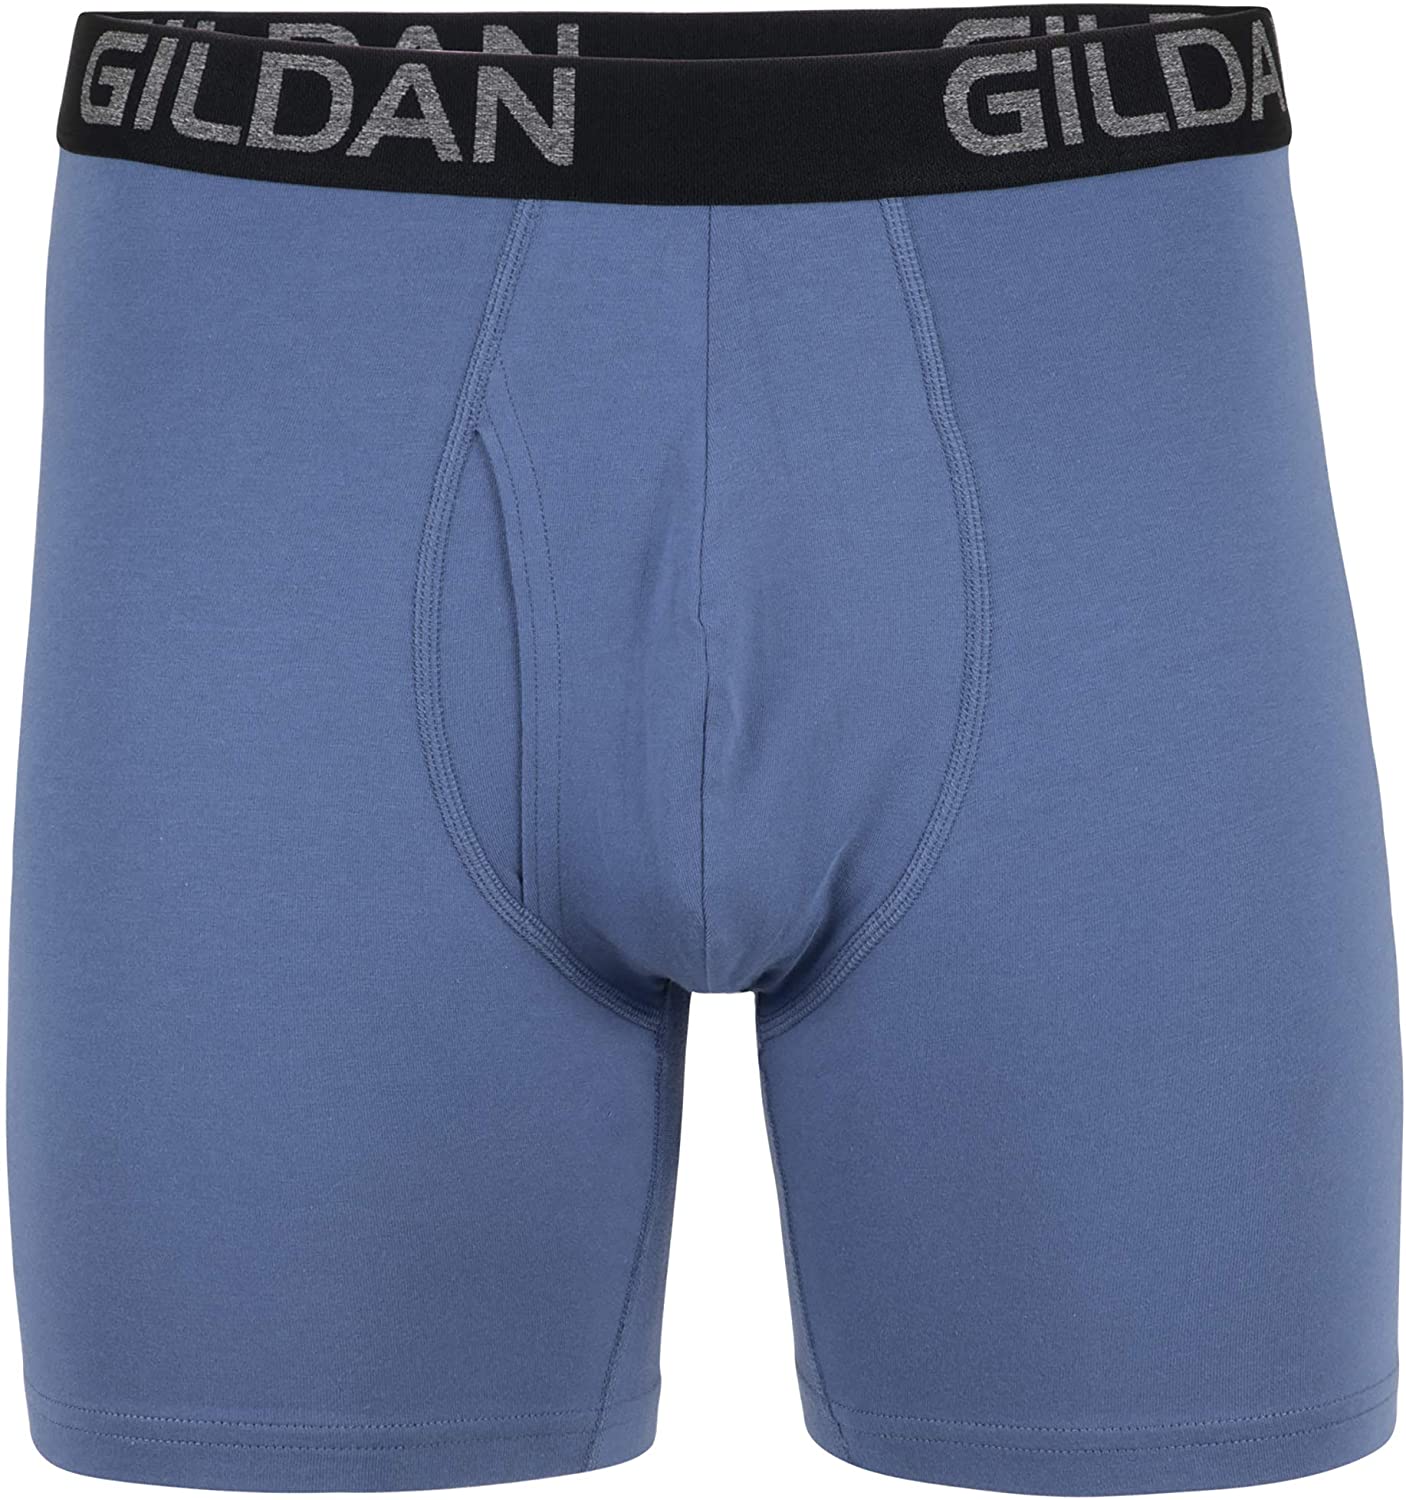 Gildan Mens Cotton Stretch Regular Leg Boxer Brief